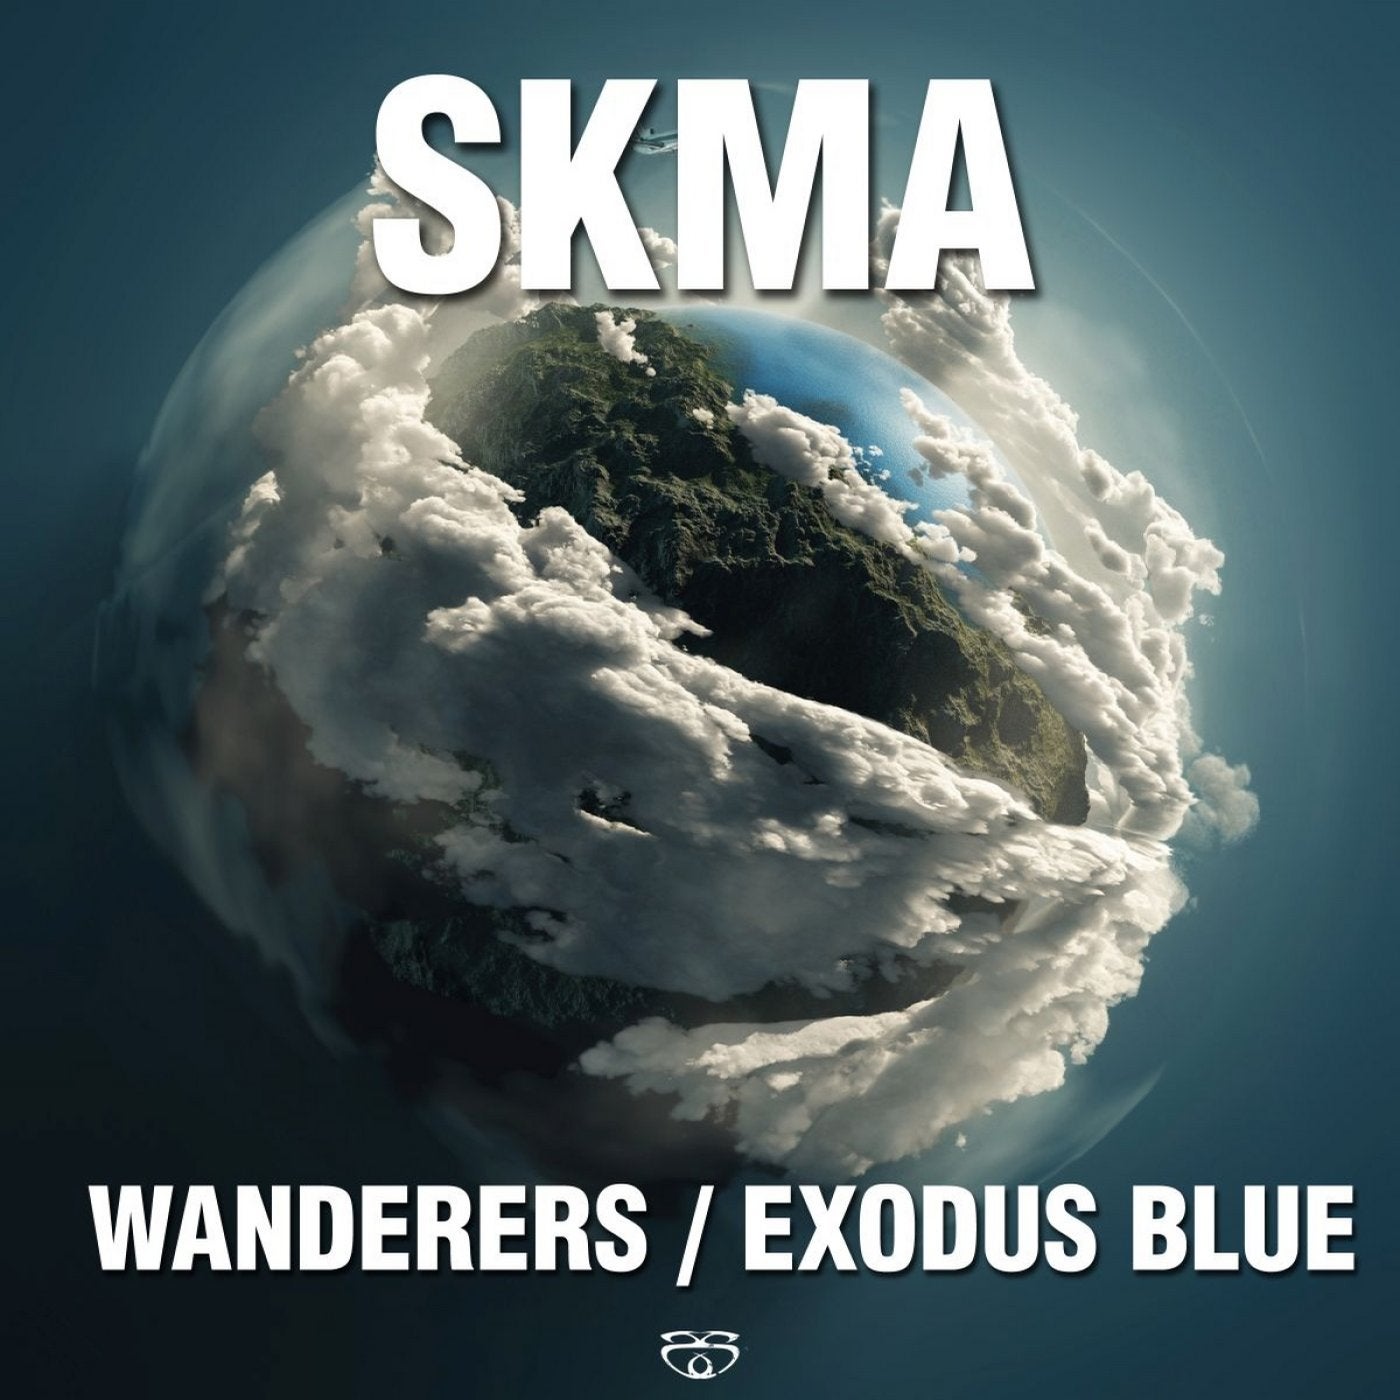 Wanderers / Exodus Blue